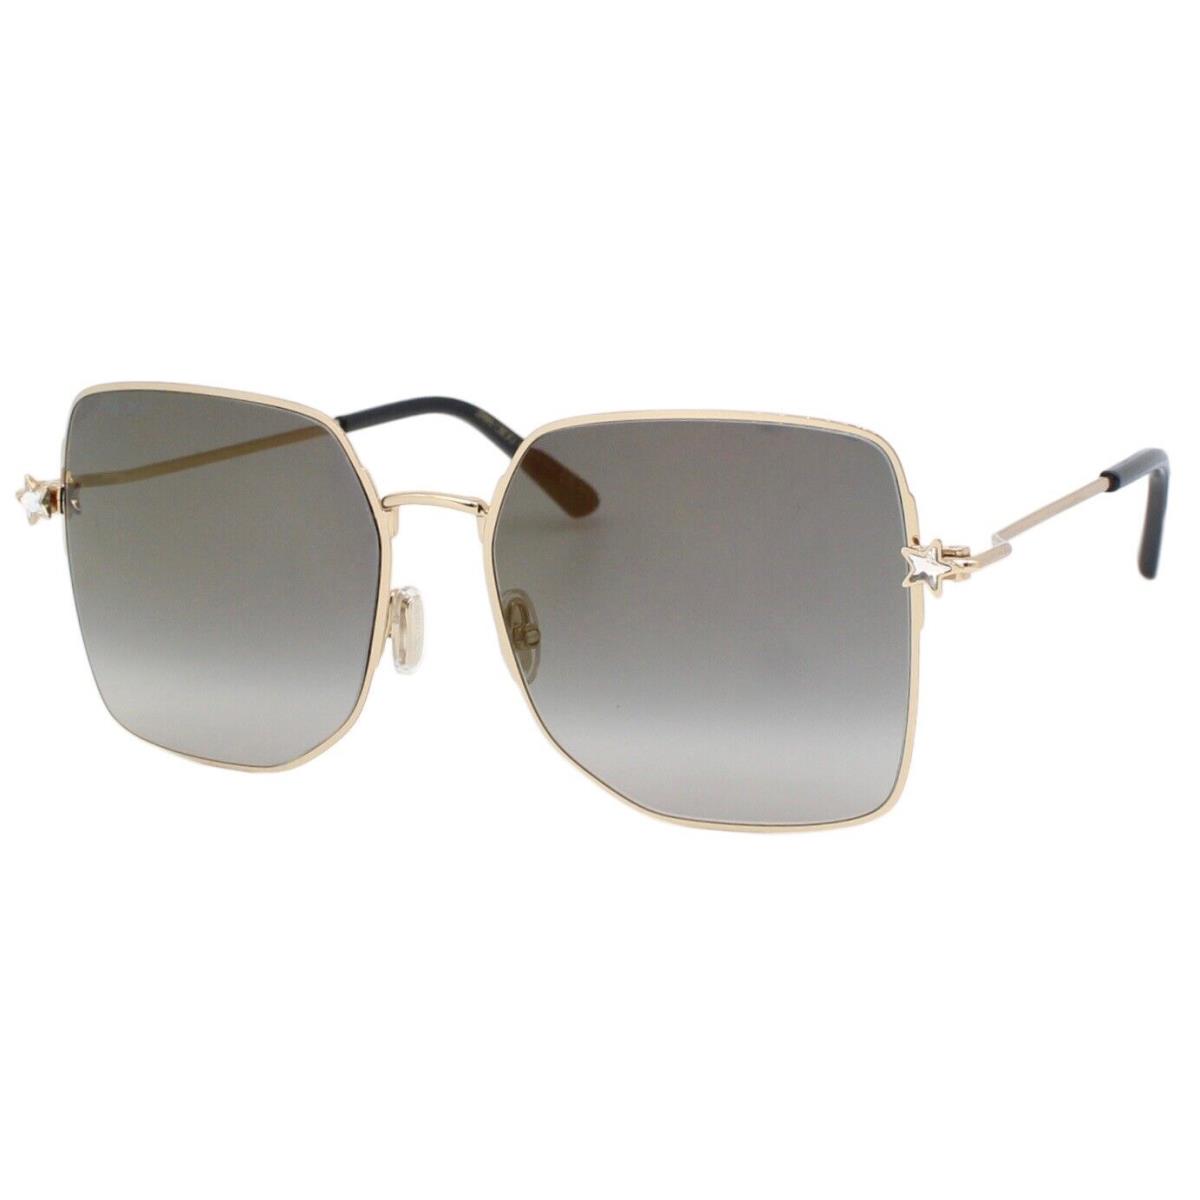 Jimmy Choo Trisha/g/sk J5G Gold Gray Gradient Women s Sunglasses 58-17-150 Wcase